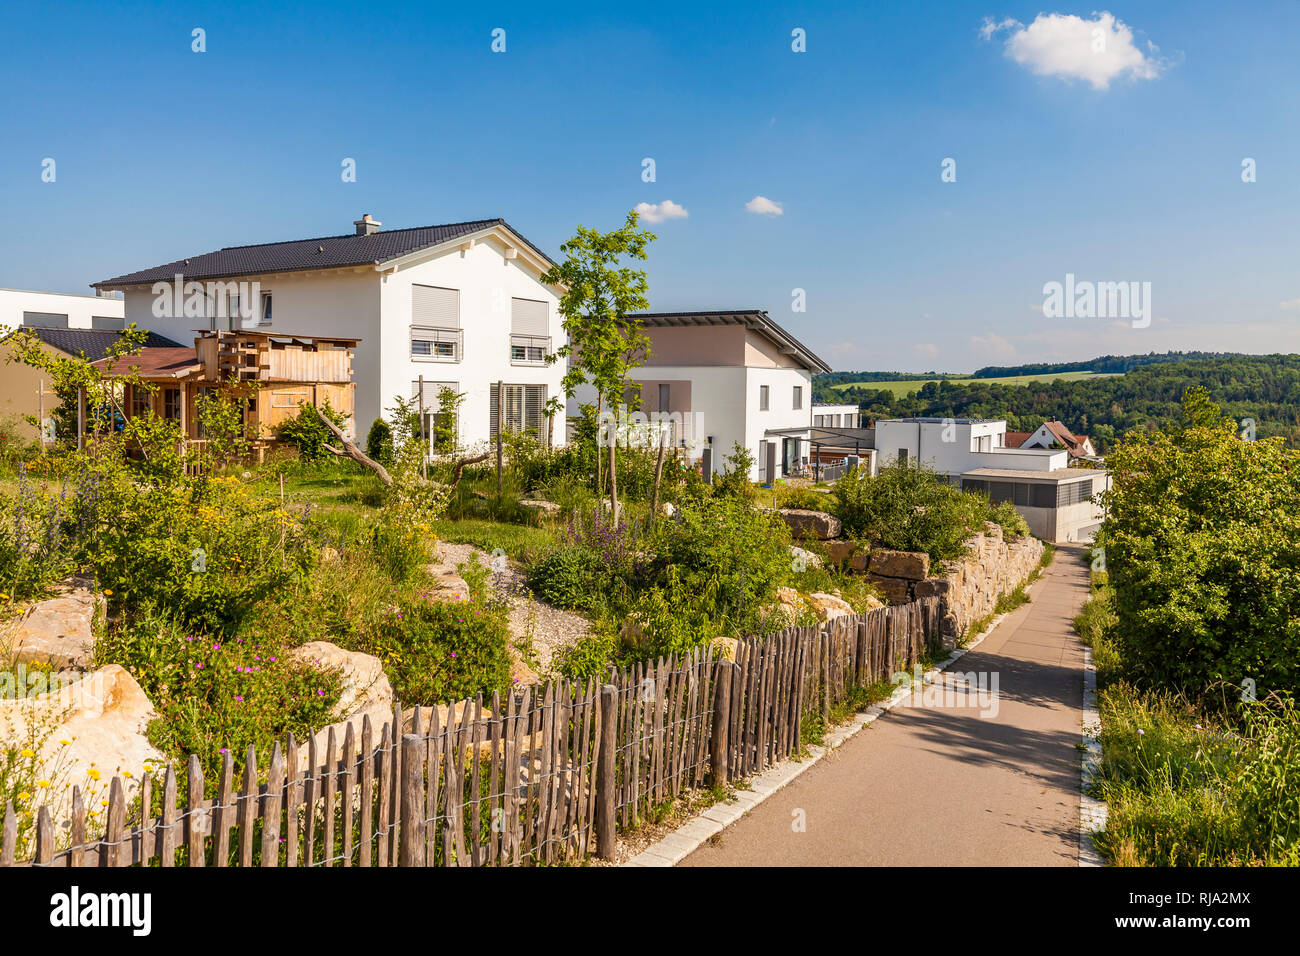 Germany, Baden-WÃ¼rttemberg, Blaustein, development area, various single and multi-family houses Stock Photo